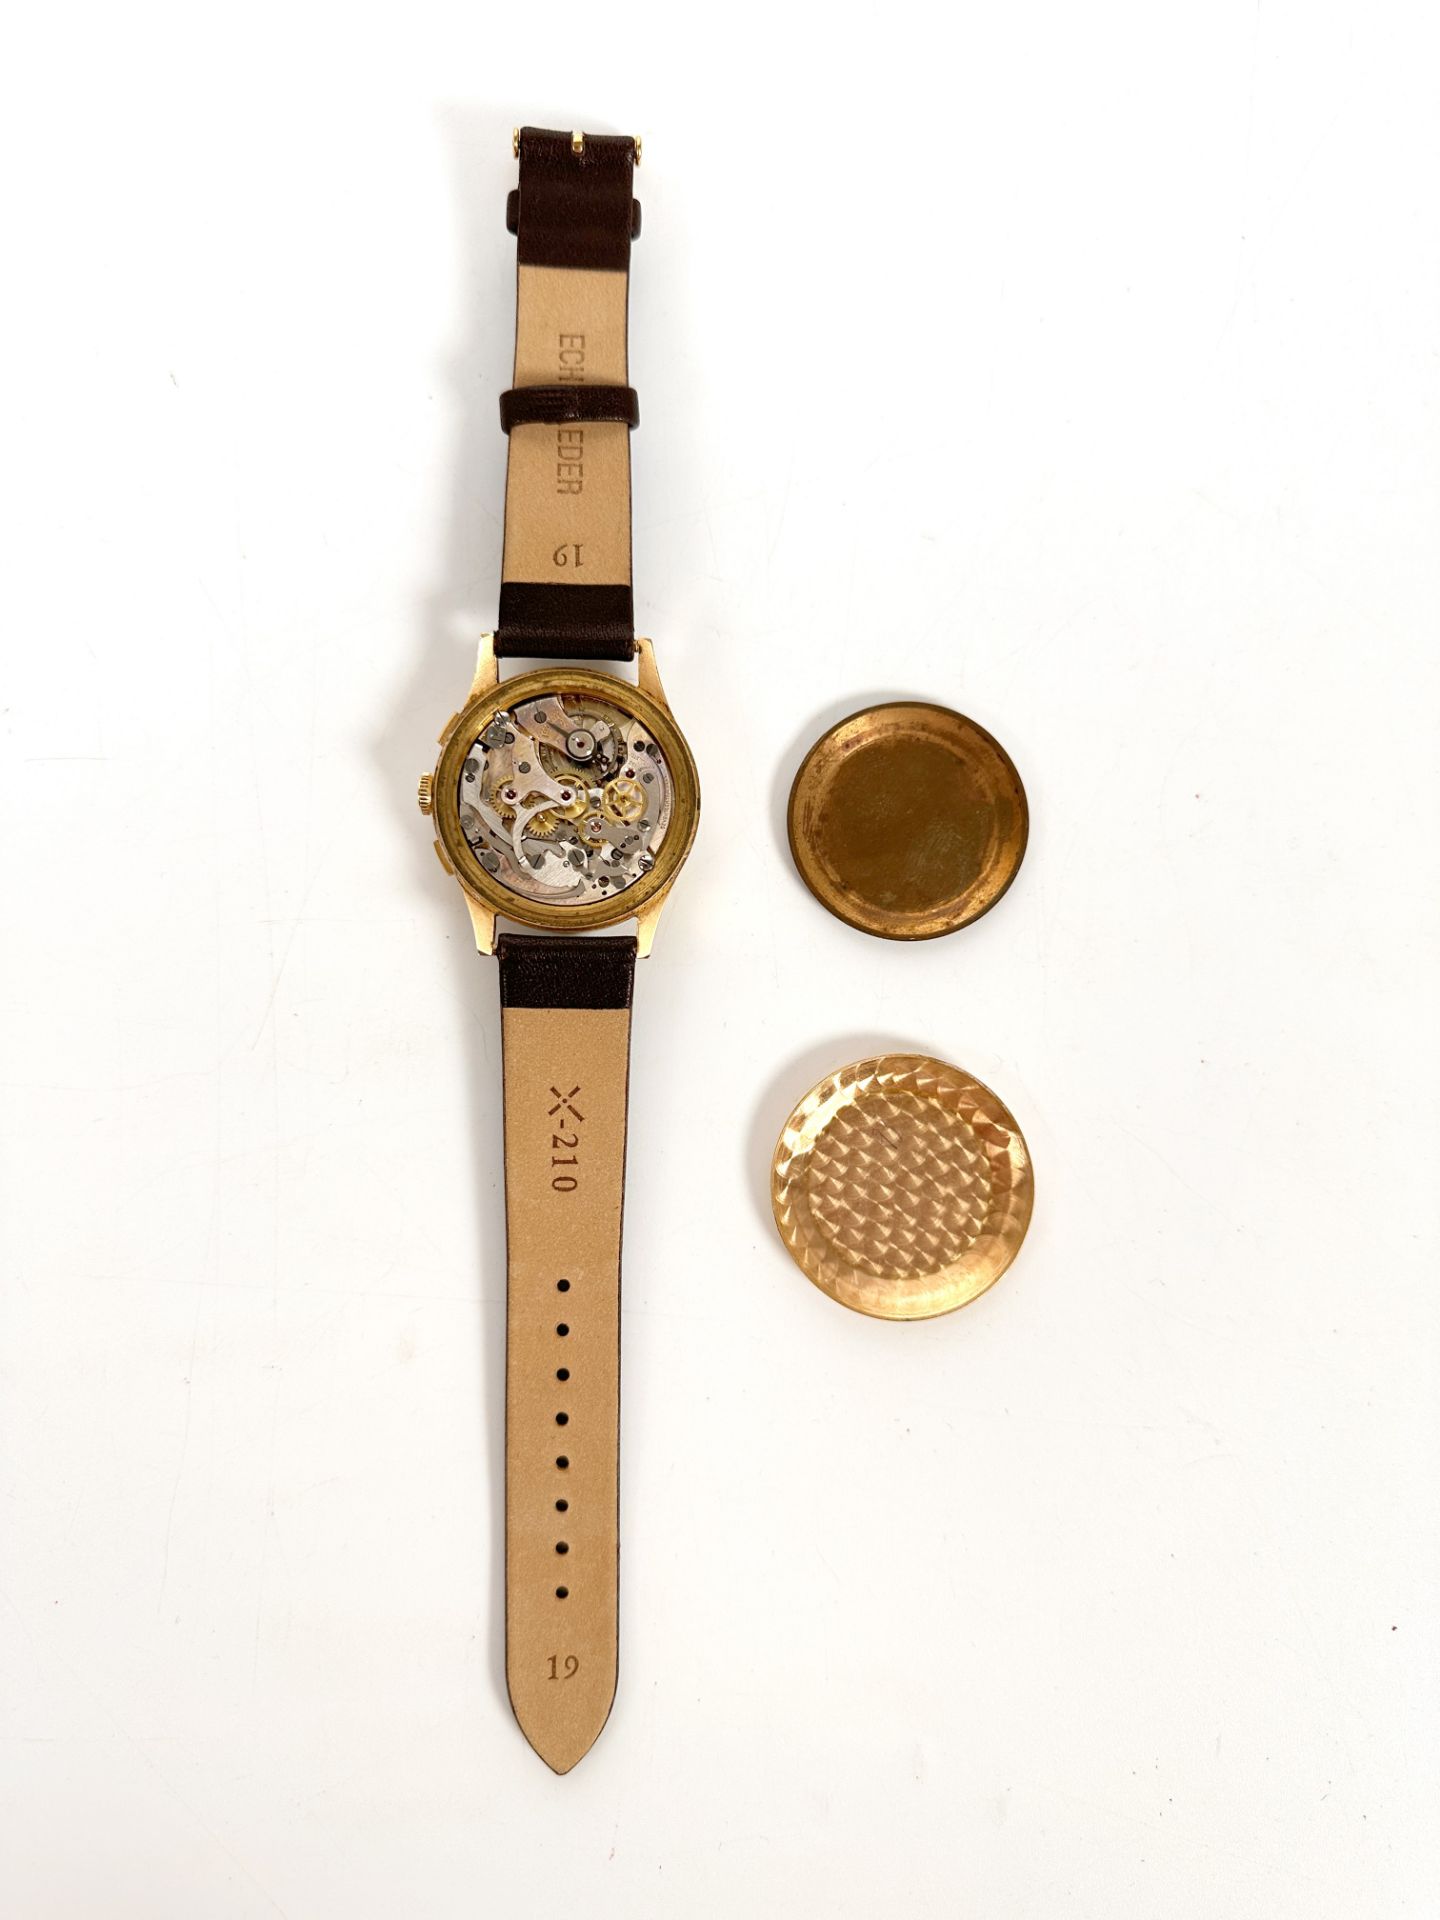 No Reserve - Docker Chronograph Suisse - Men's watch.  - Image 7 of 7